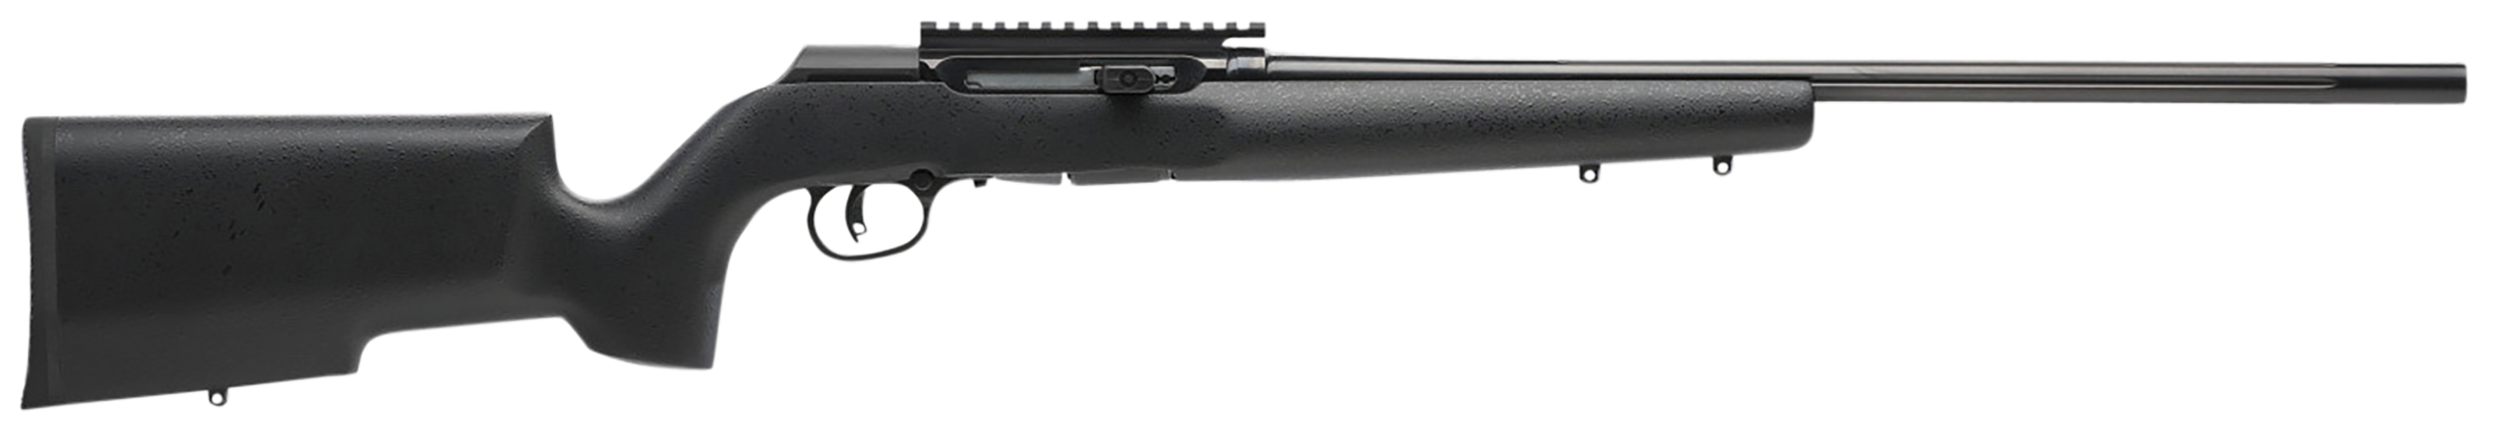 Savage Arms A17 Pro Varmint 17 Hmr 101 22 Barrel Semi Auto Rifles